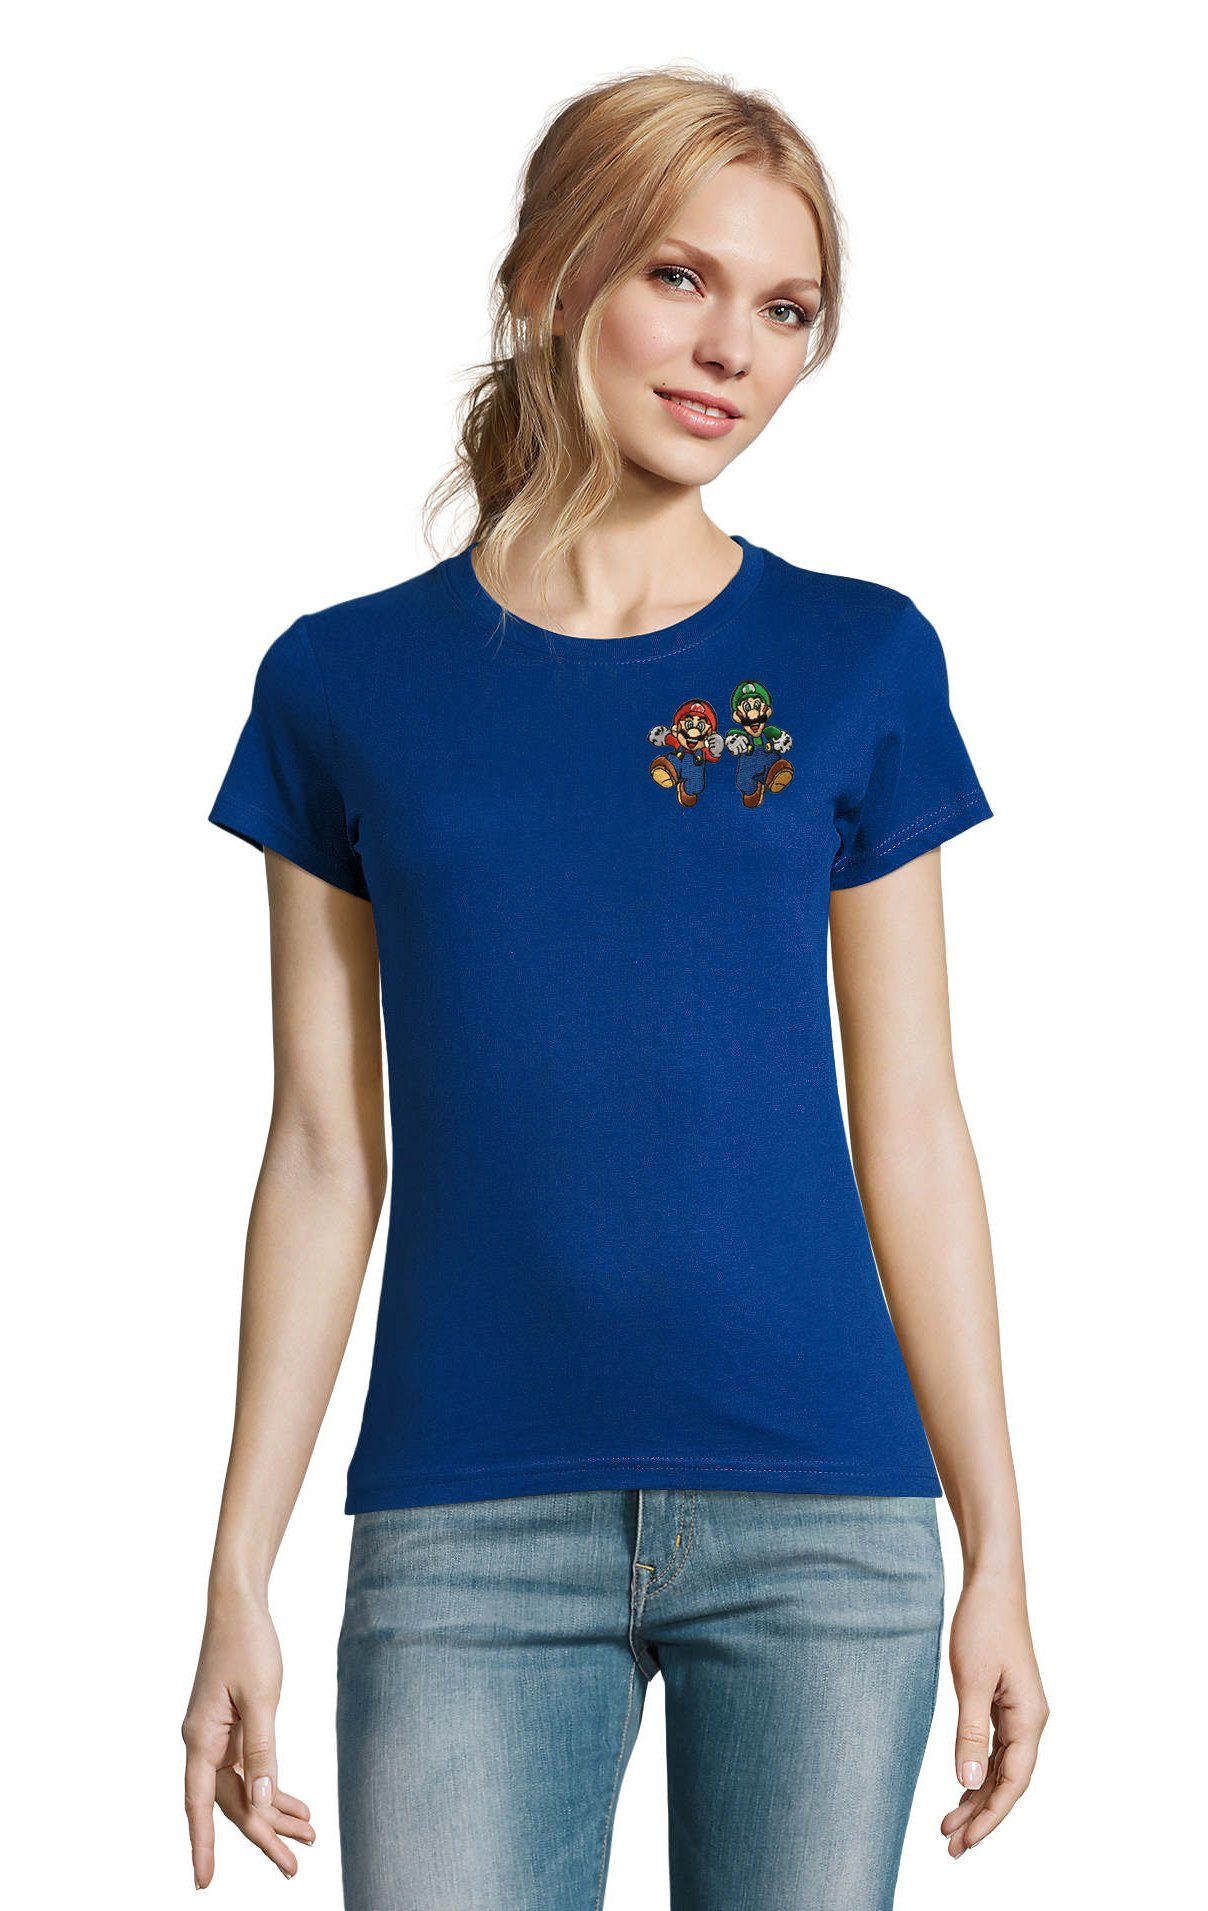 Blondie & Brownie T-Shirt Damen Mario & Luigi Brust Stick Yoshi Bowser Nintendo Gaming bestickt Blau